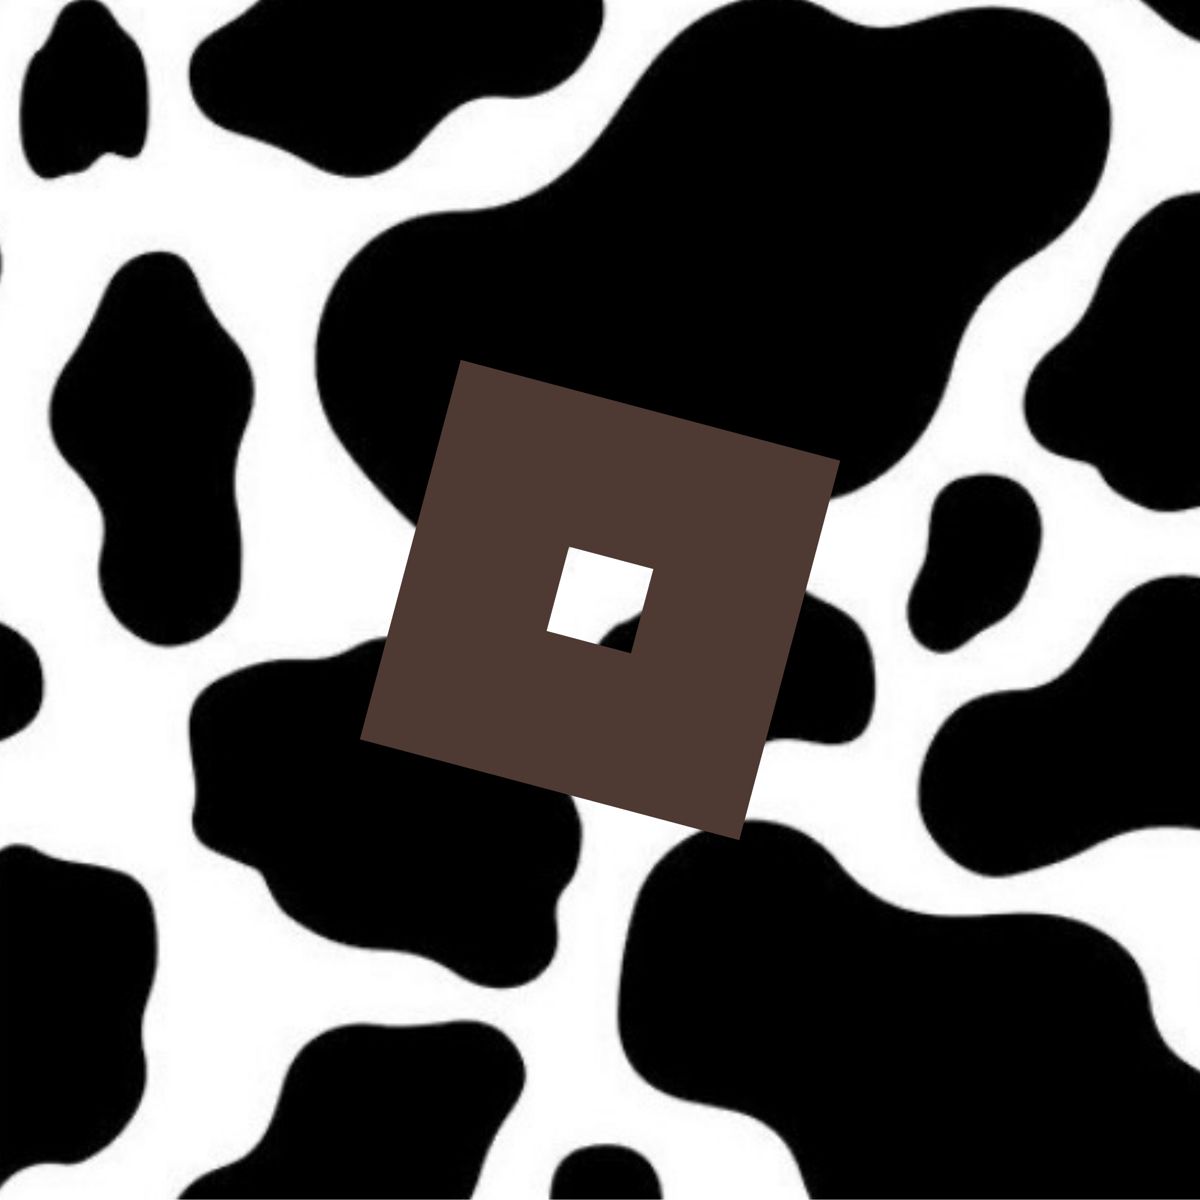 Roblox cow print app icon. App icon, iPhone photo app, Ios app icon design